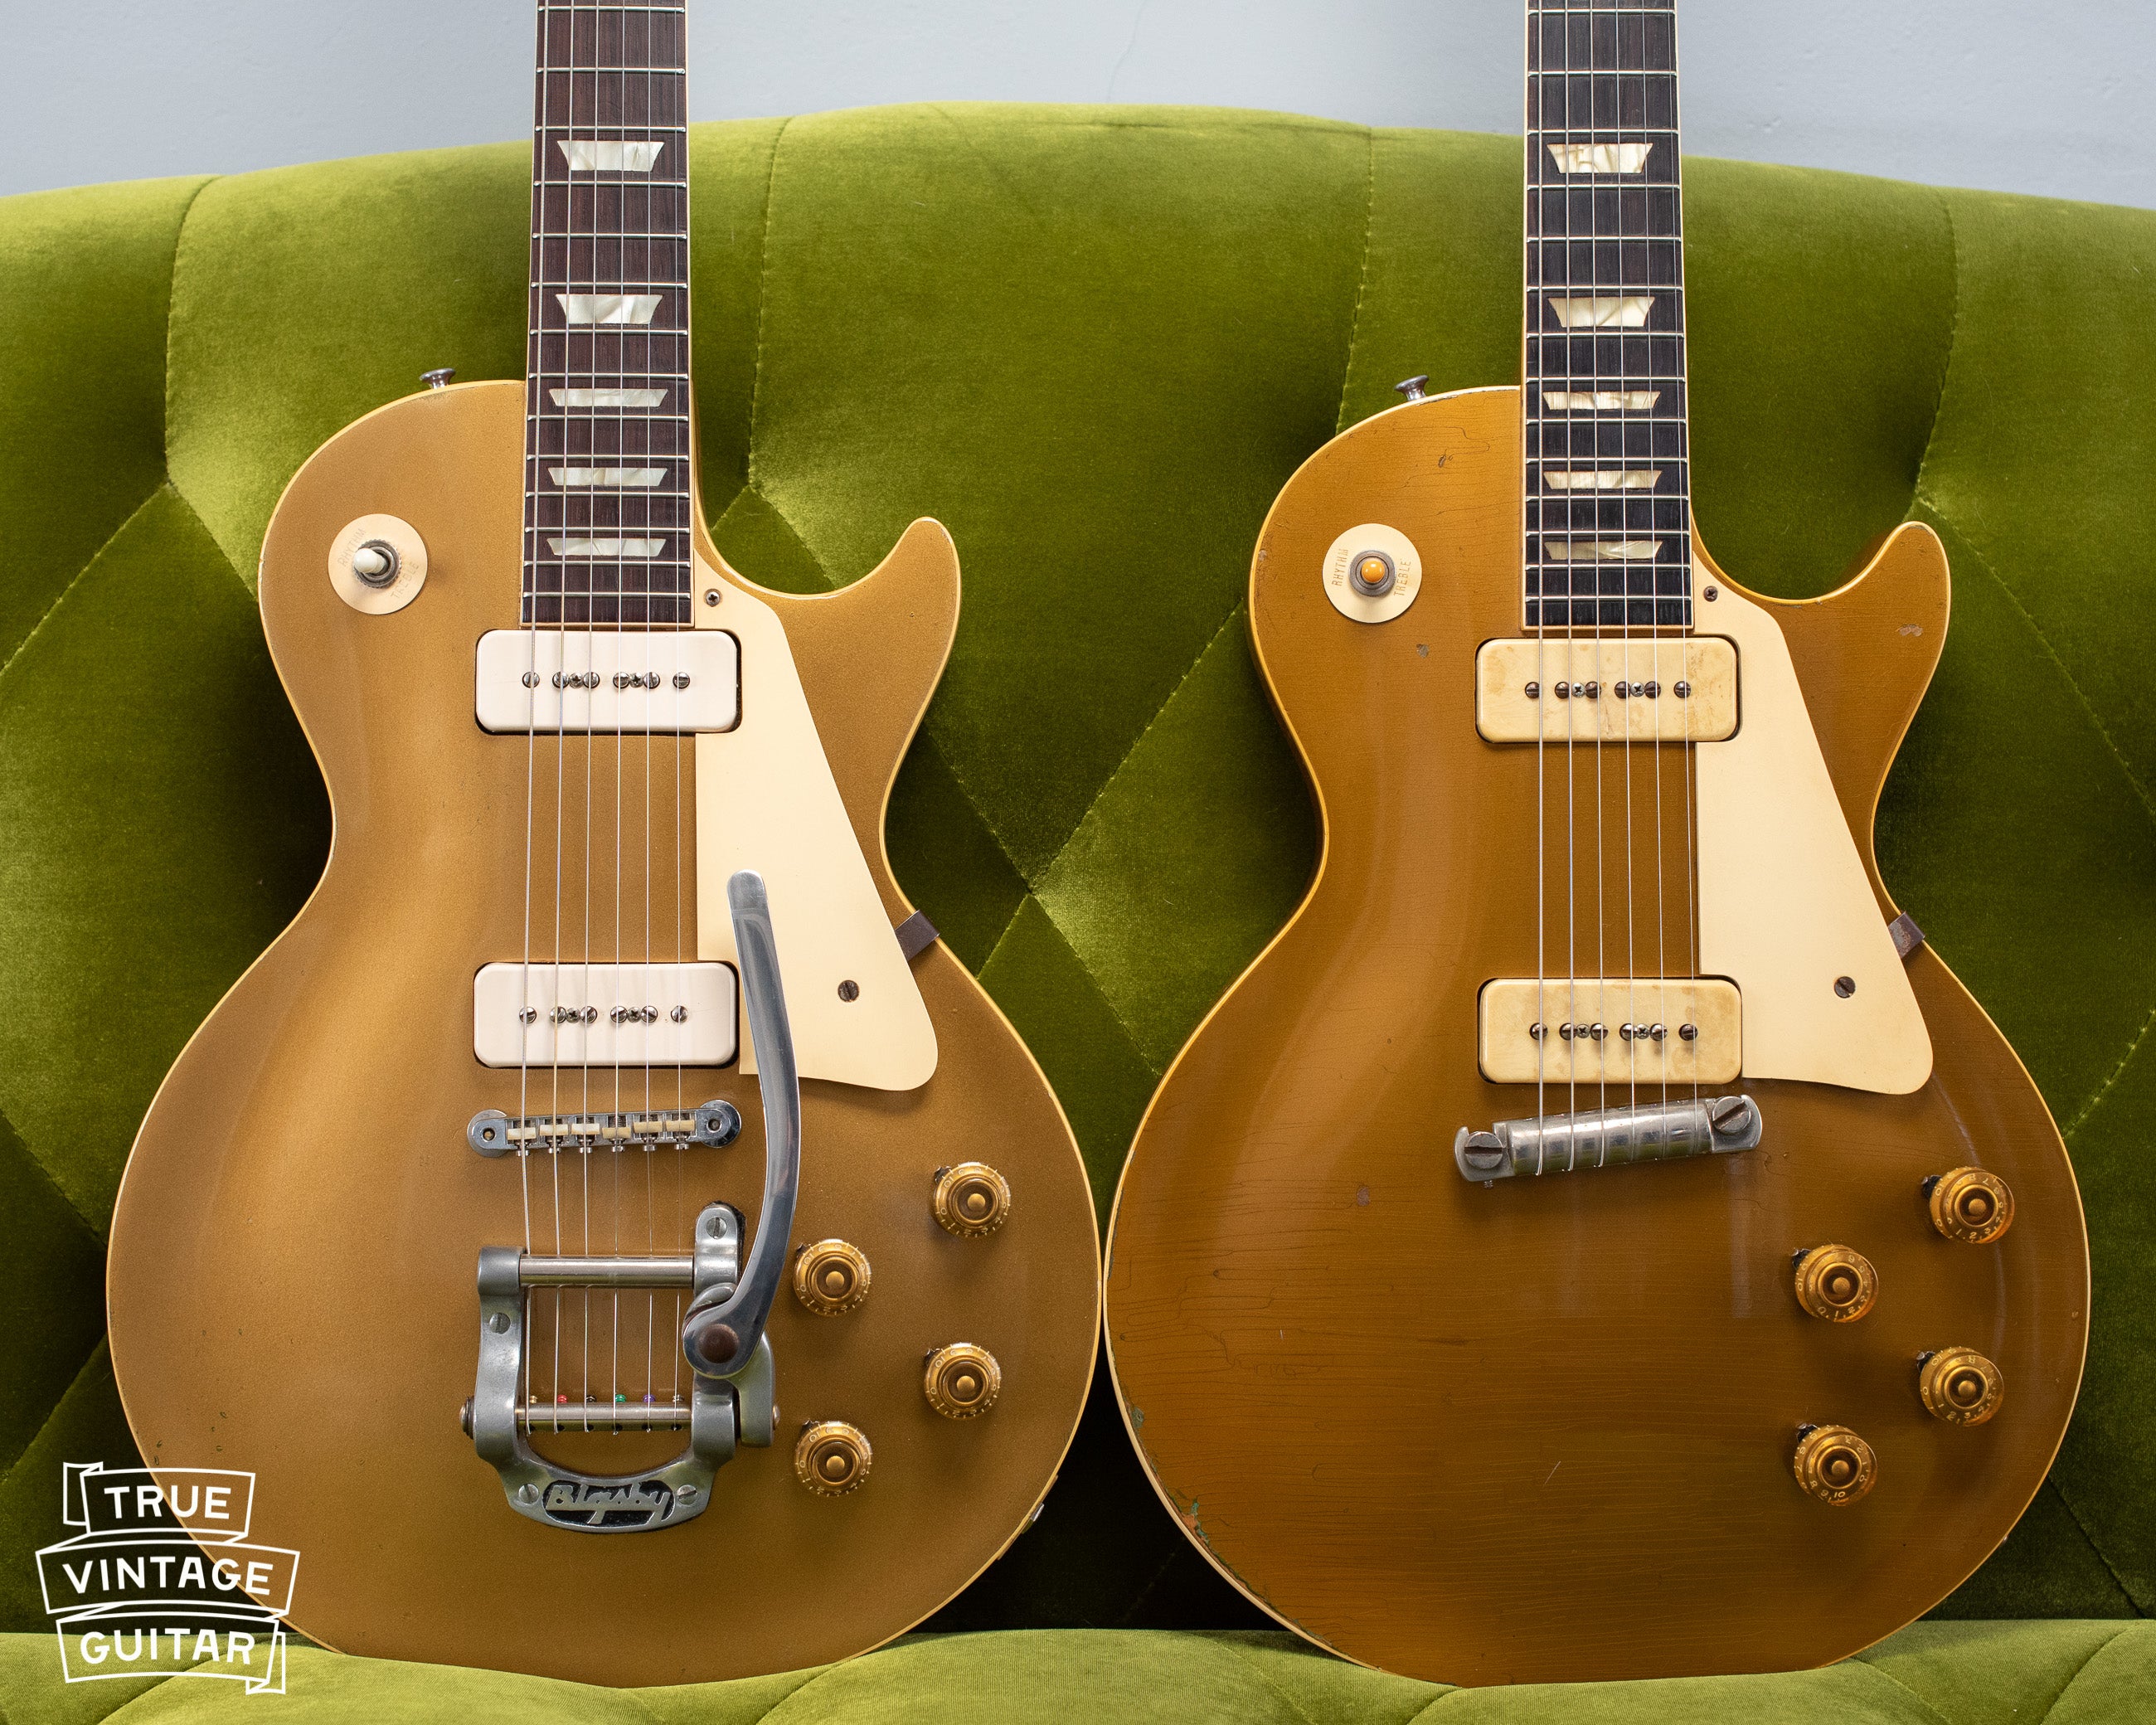 Vintage Gibson Les Paul goldtop guitars